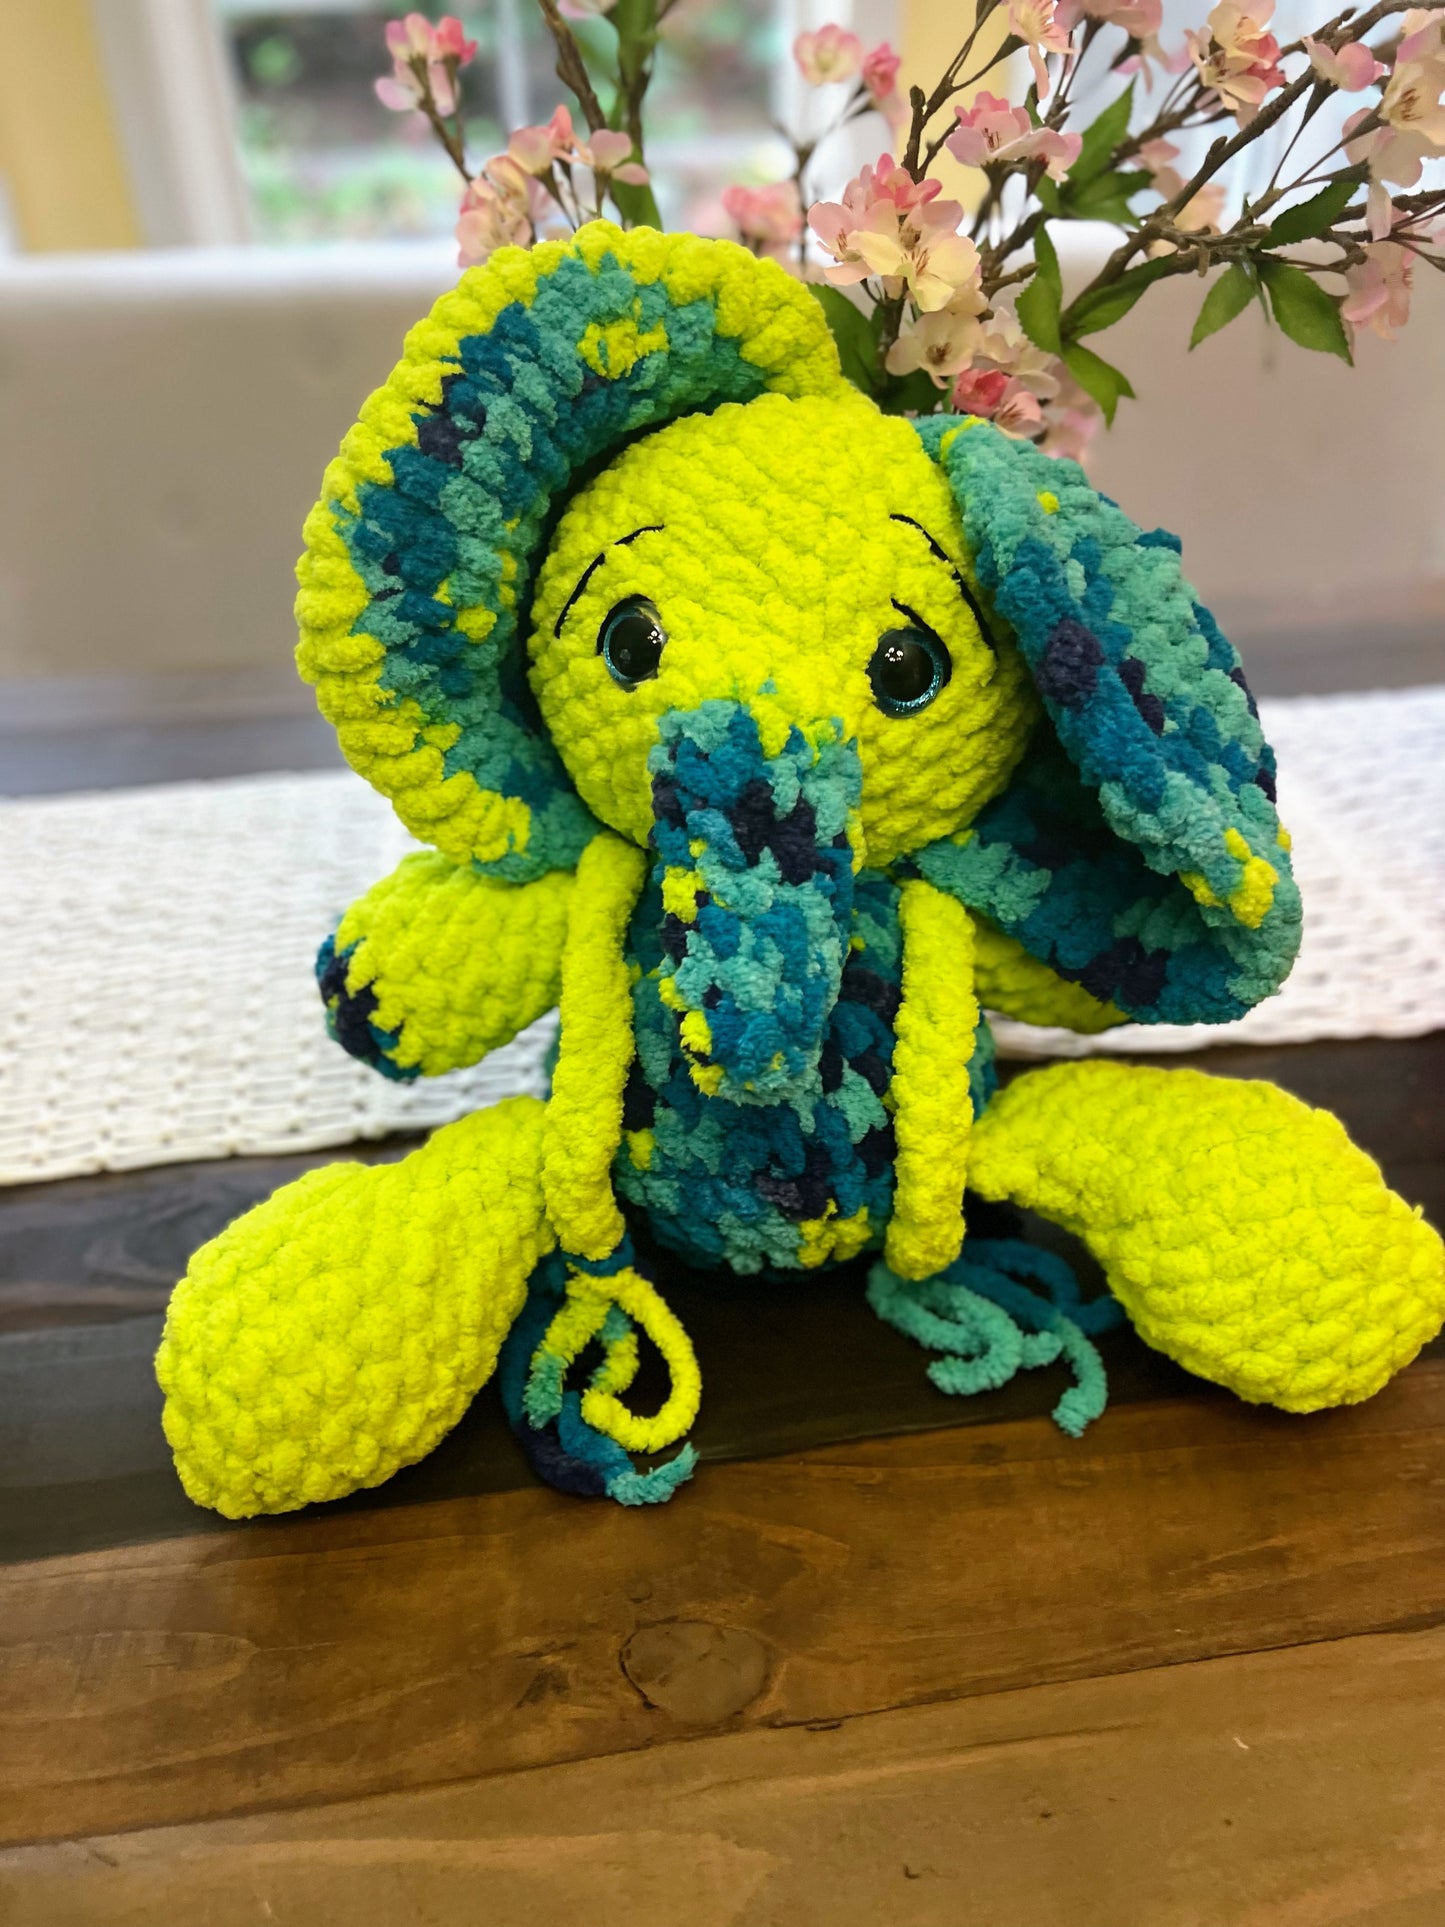 Stuffed Giant Elephant- Crochet Knitted Amigurumi Toy